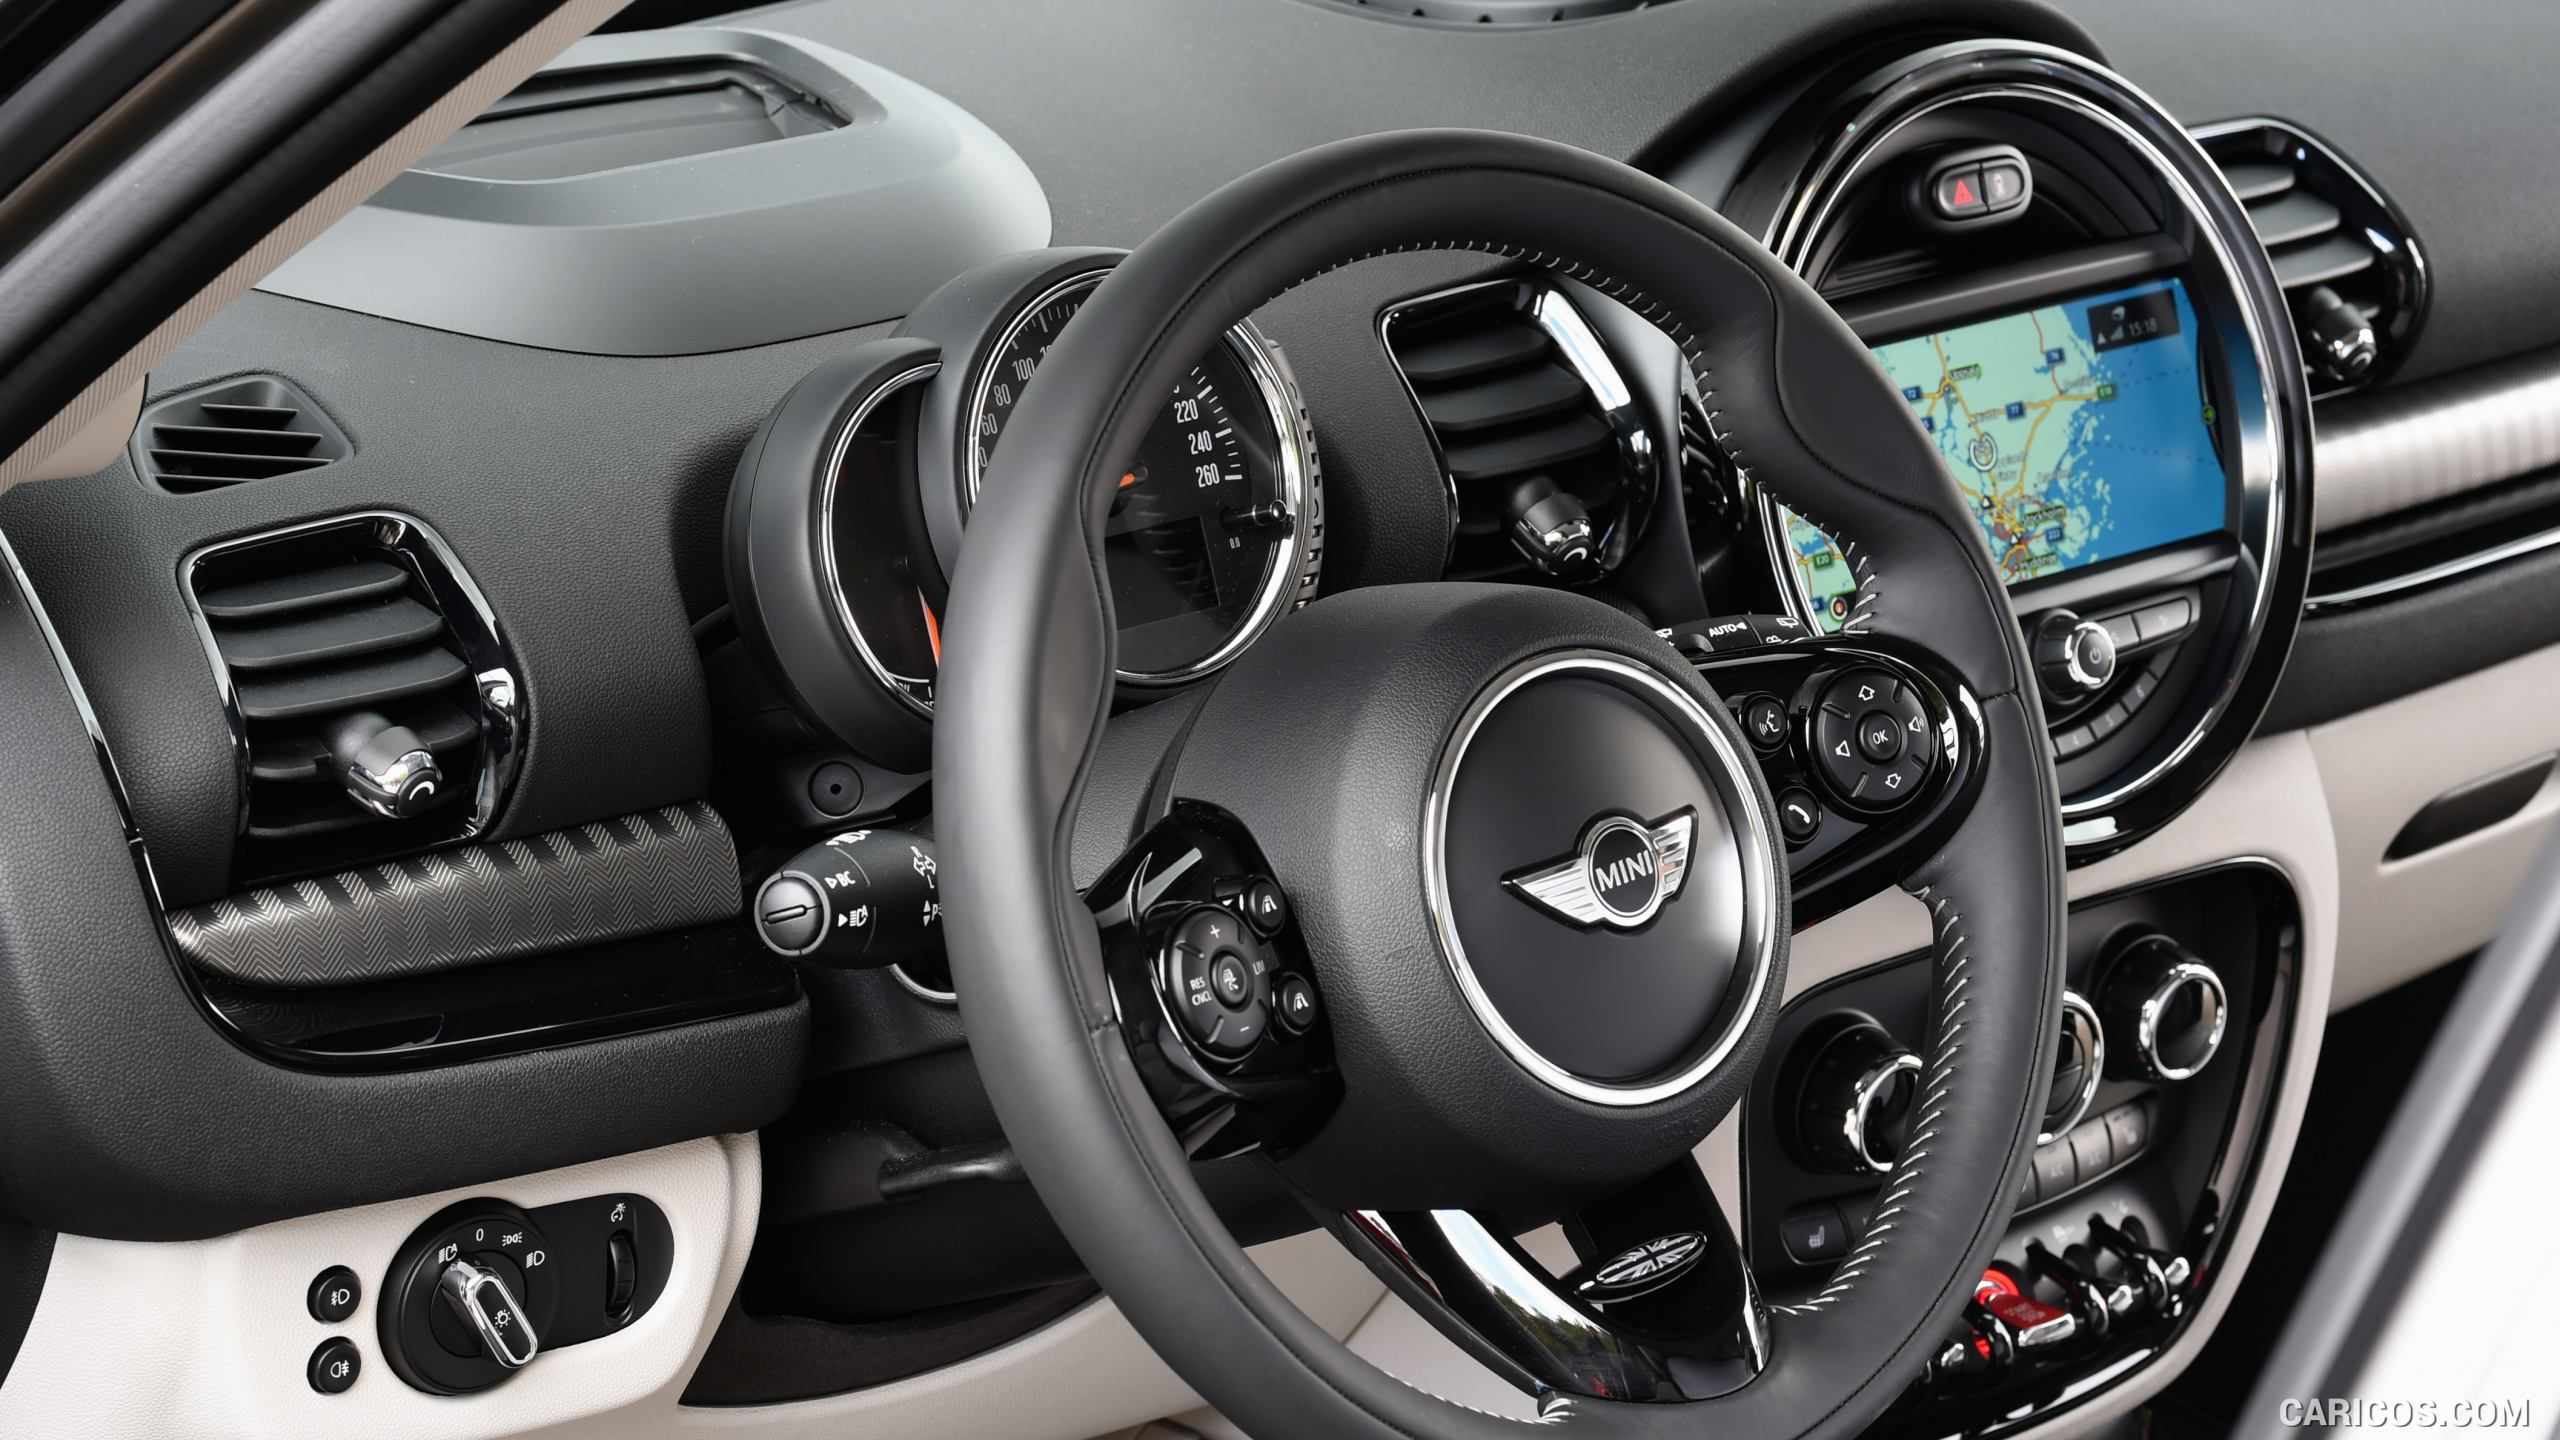 2016 MINI Cooper S Clubman in Metallic Melting Silver - Interior, Steering Wheel, #235 of 380